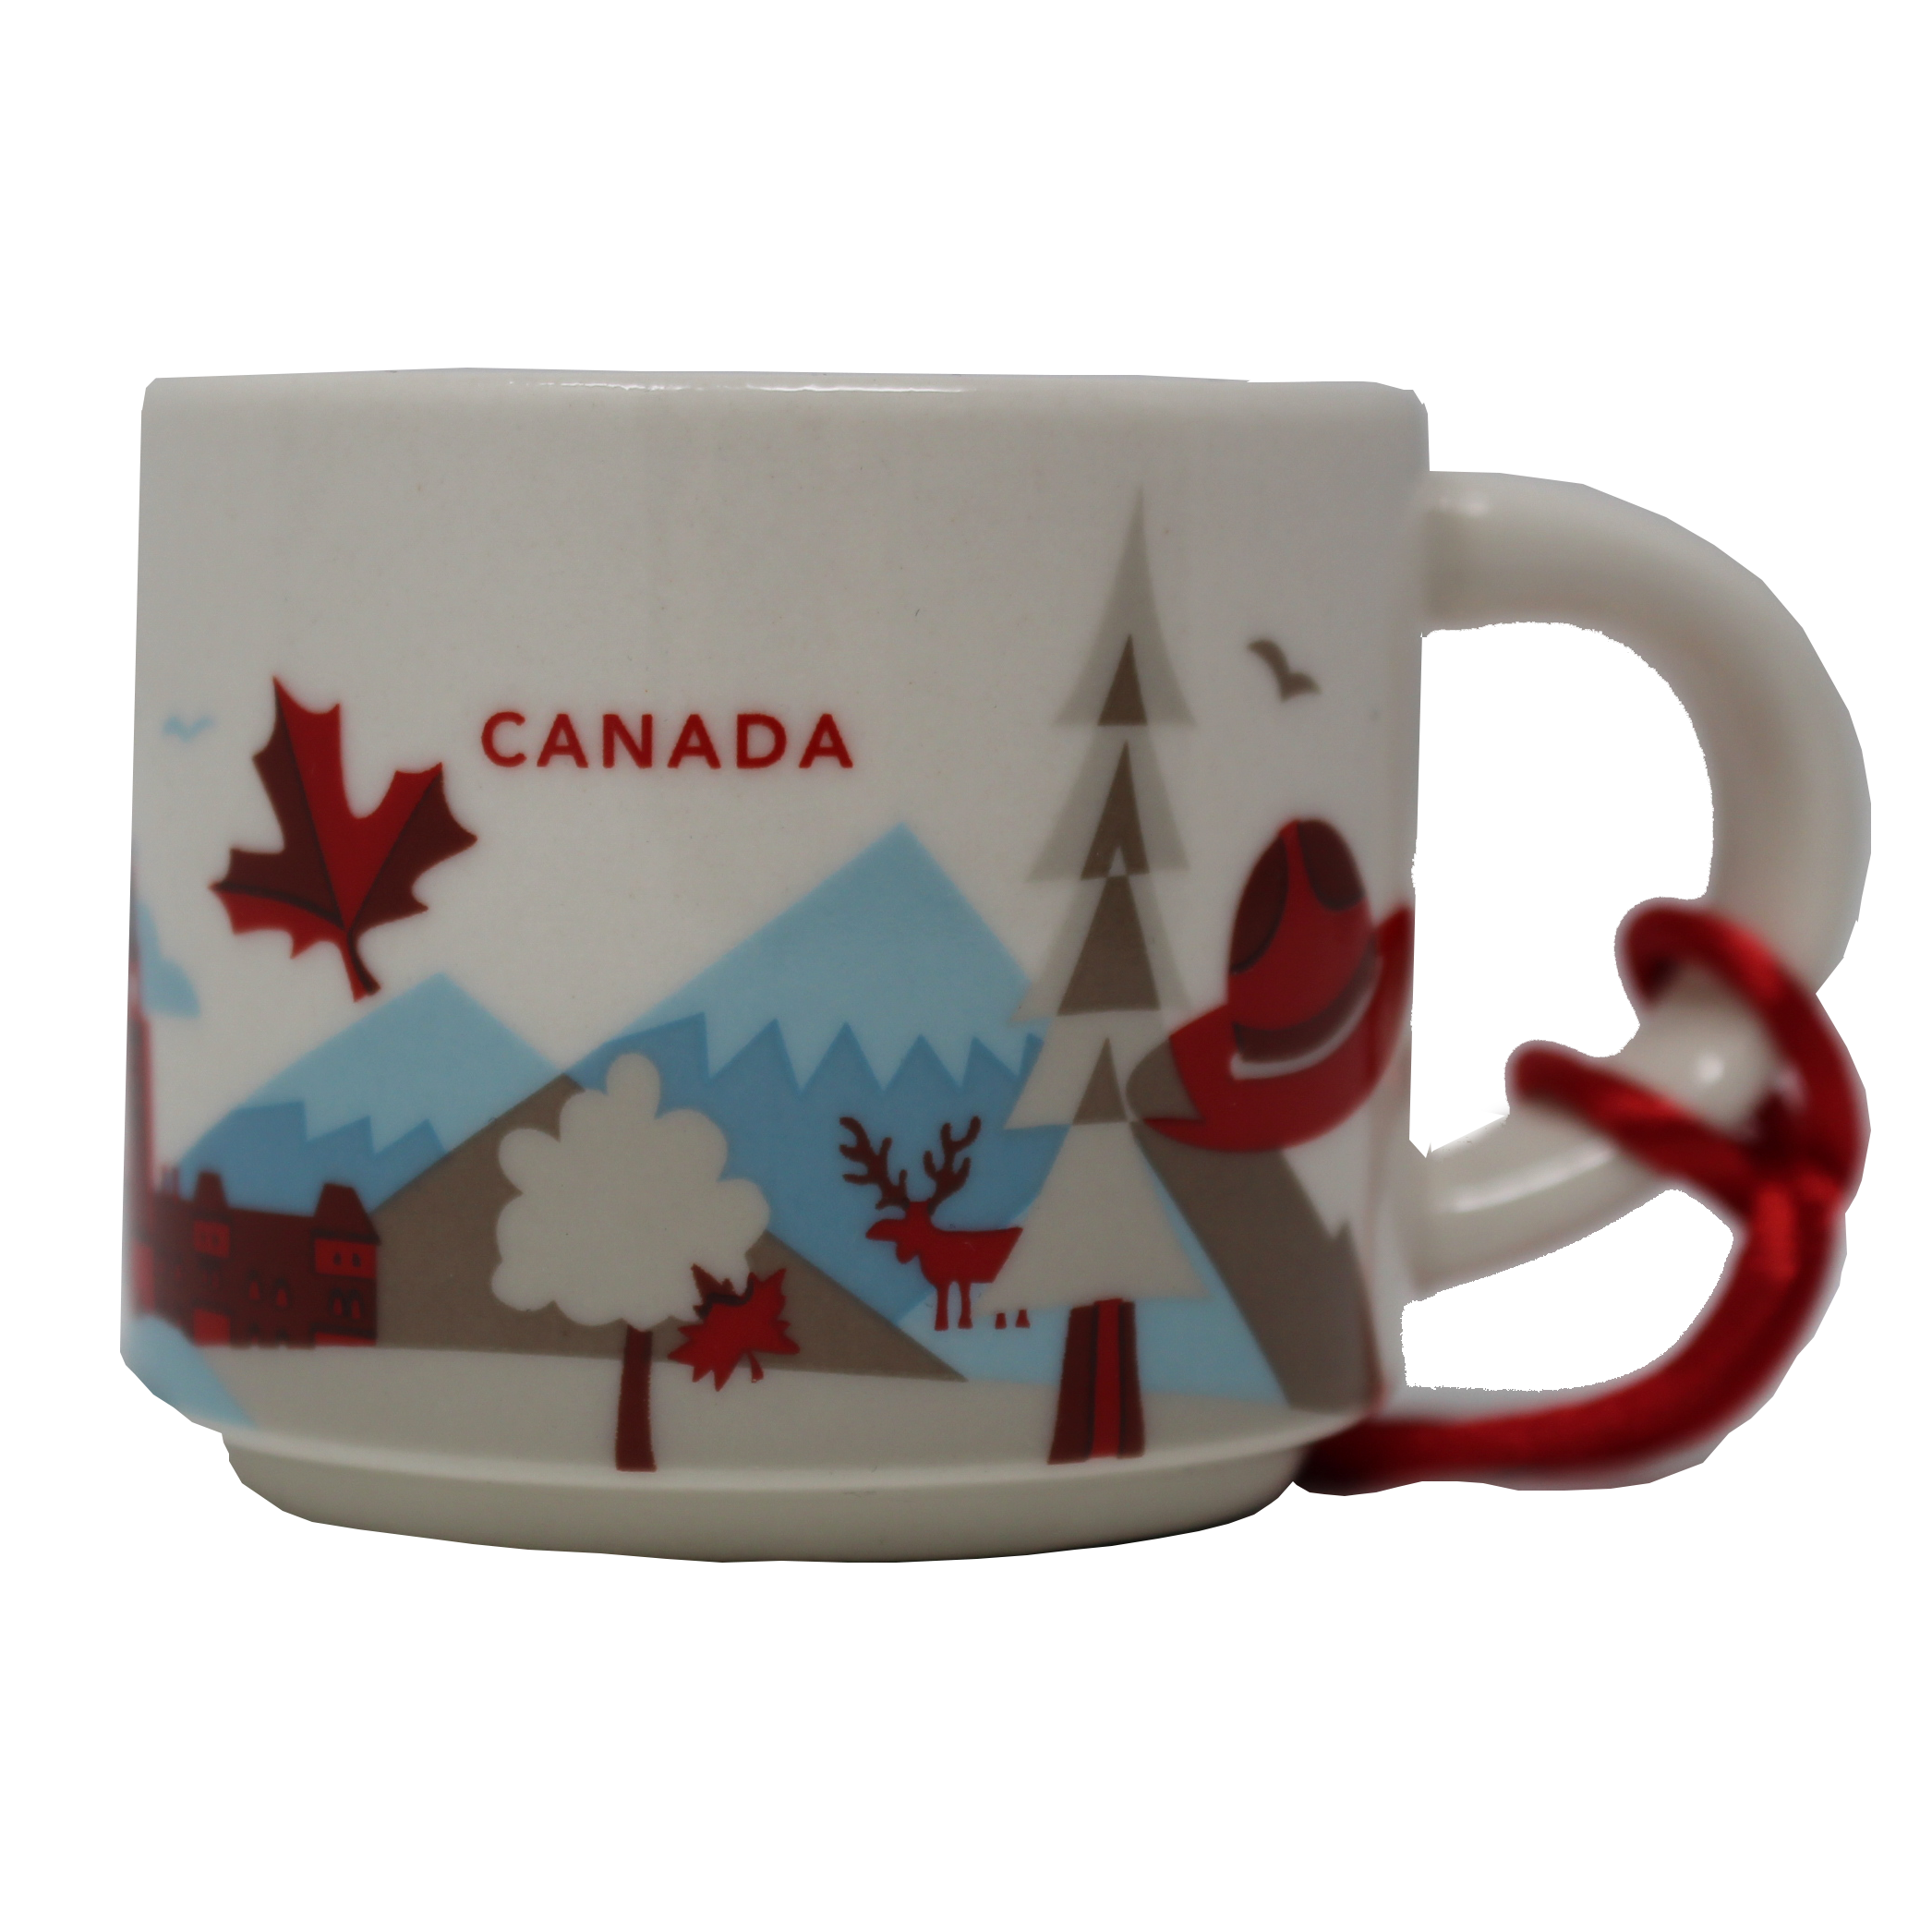 Starbucks You Are Here Series Canada Ceramic Demitasse Ornament Mug, 2 Oz